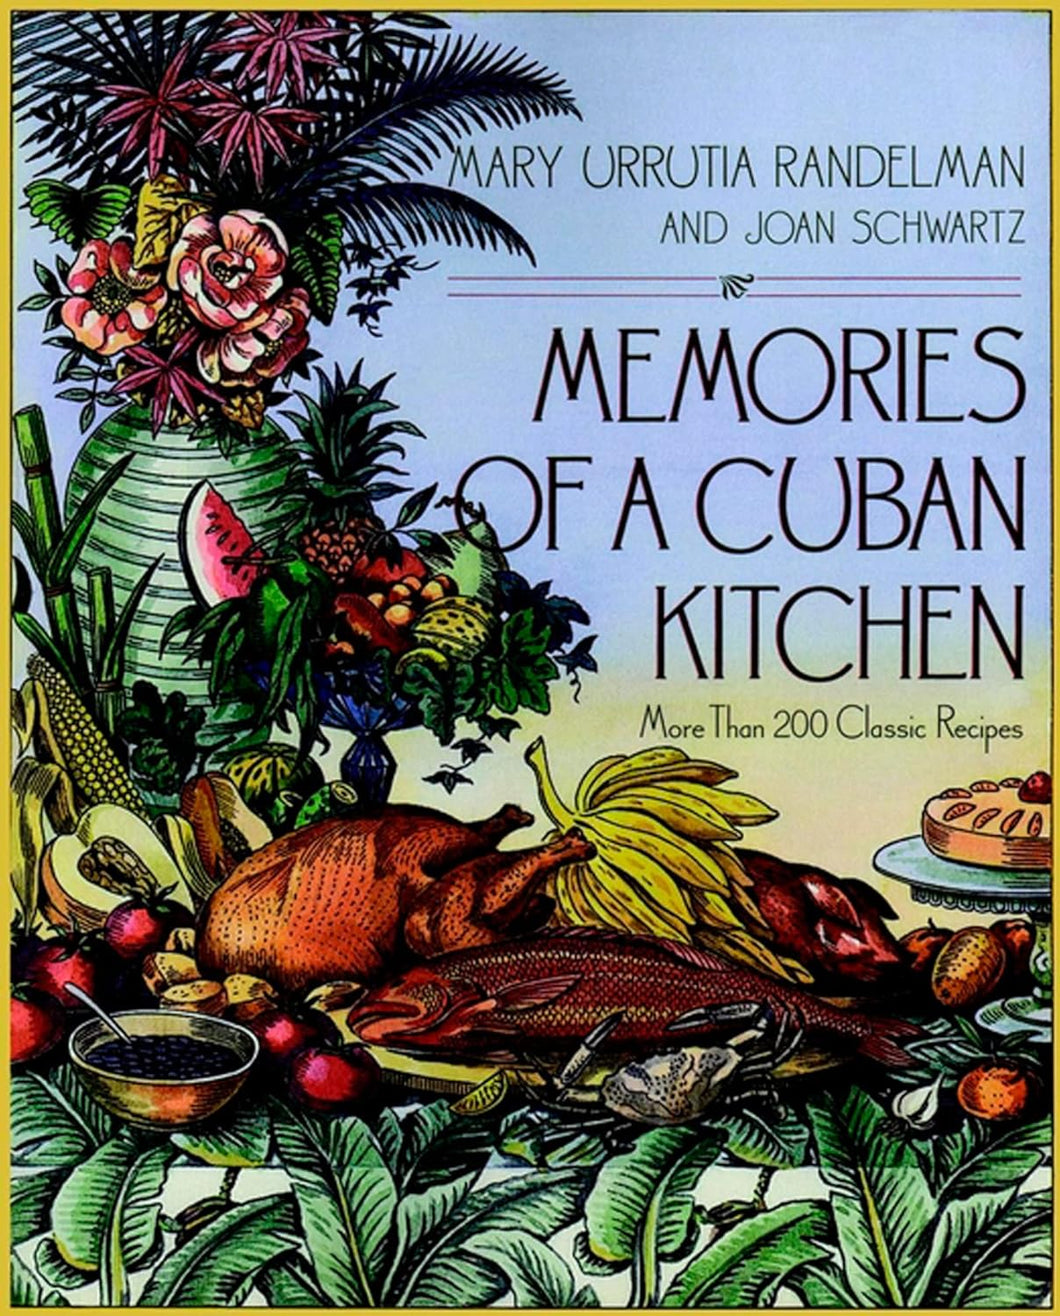 Memories of a Cuban Kitchen by Mary Urrutia Randelman and Joan Schwartz